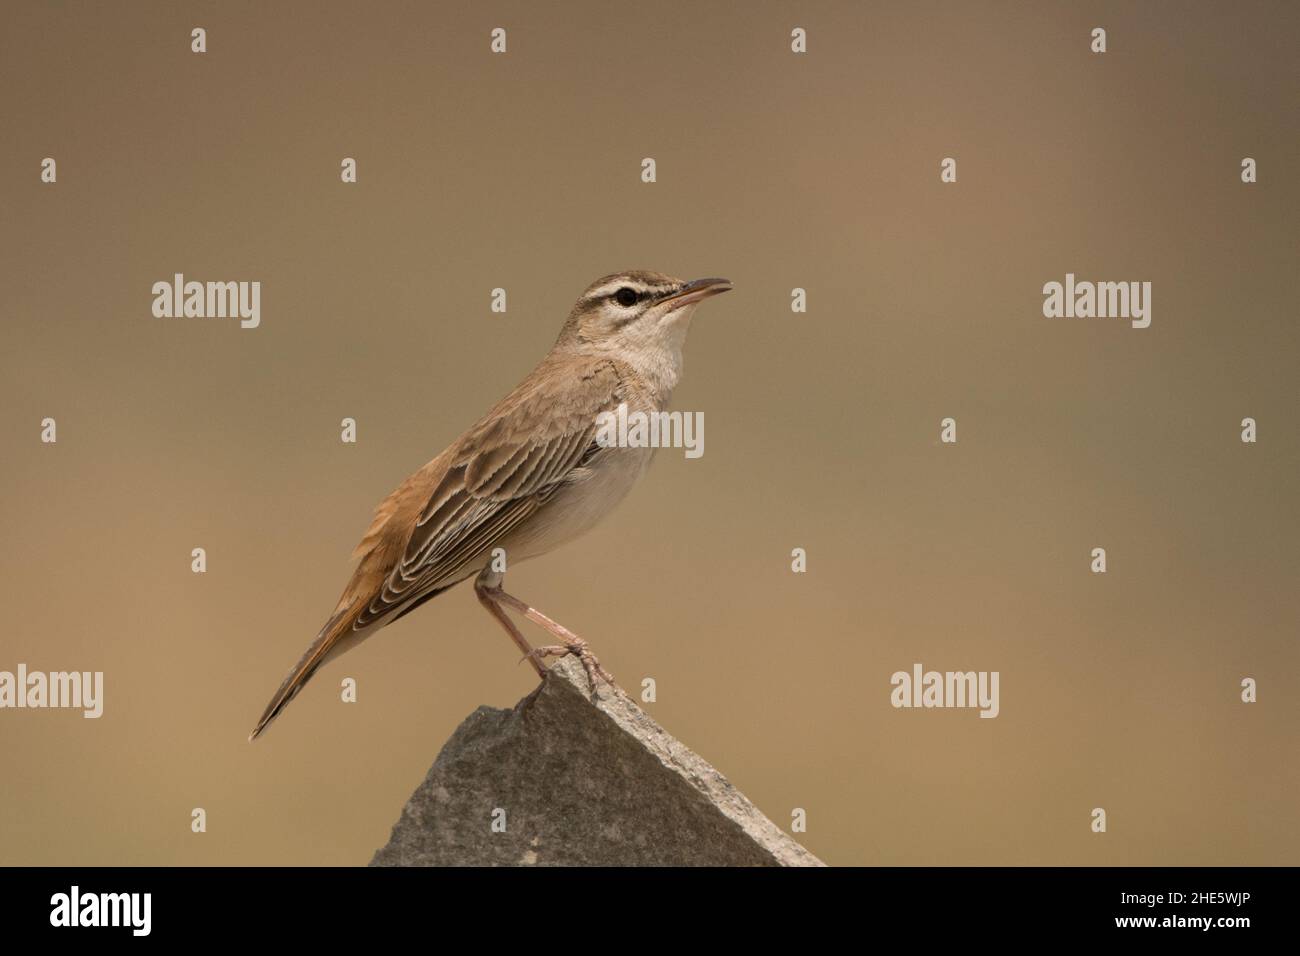 Stunning bird photo. Rufous-tailed scrub robin / Cercotrichas galactotes Stock Photo